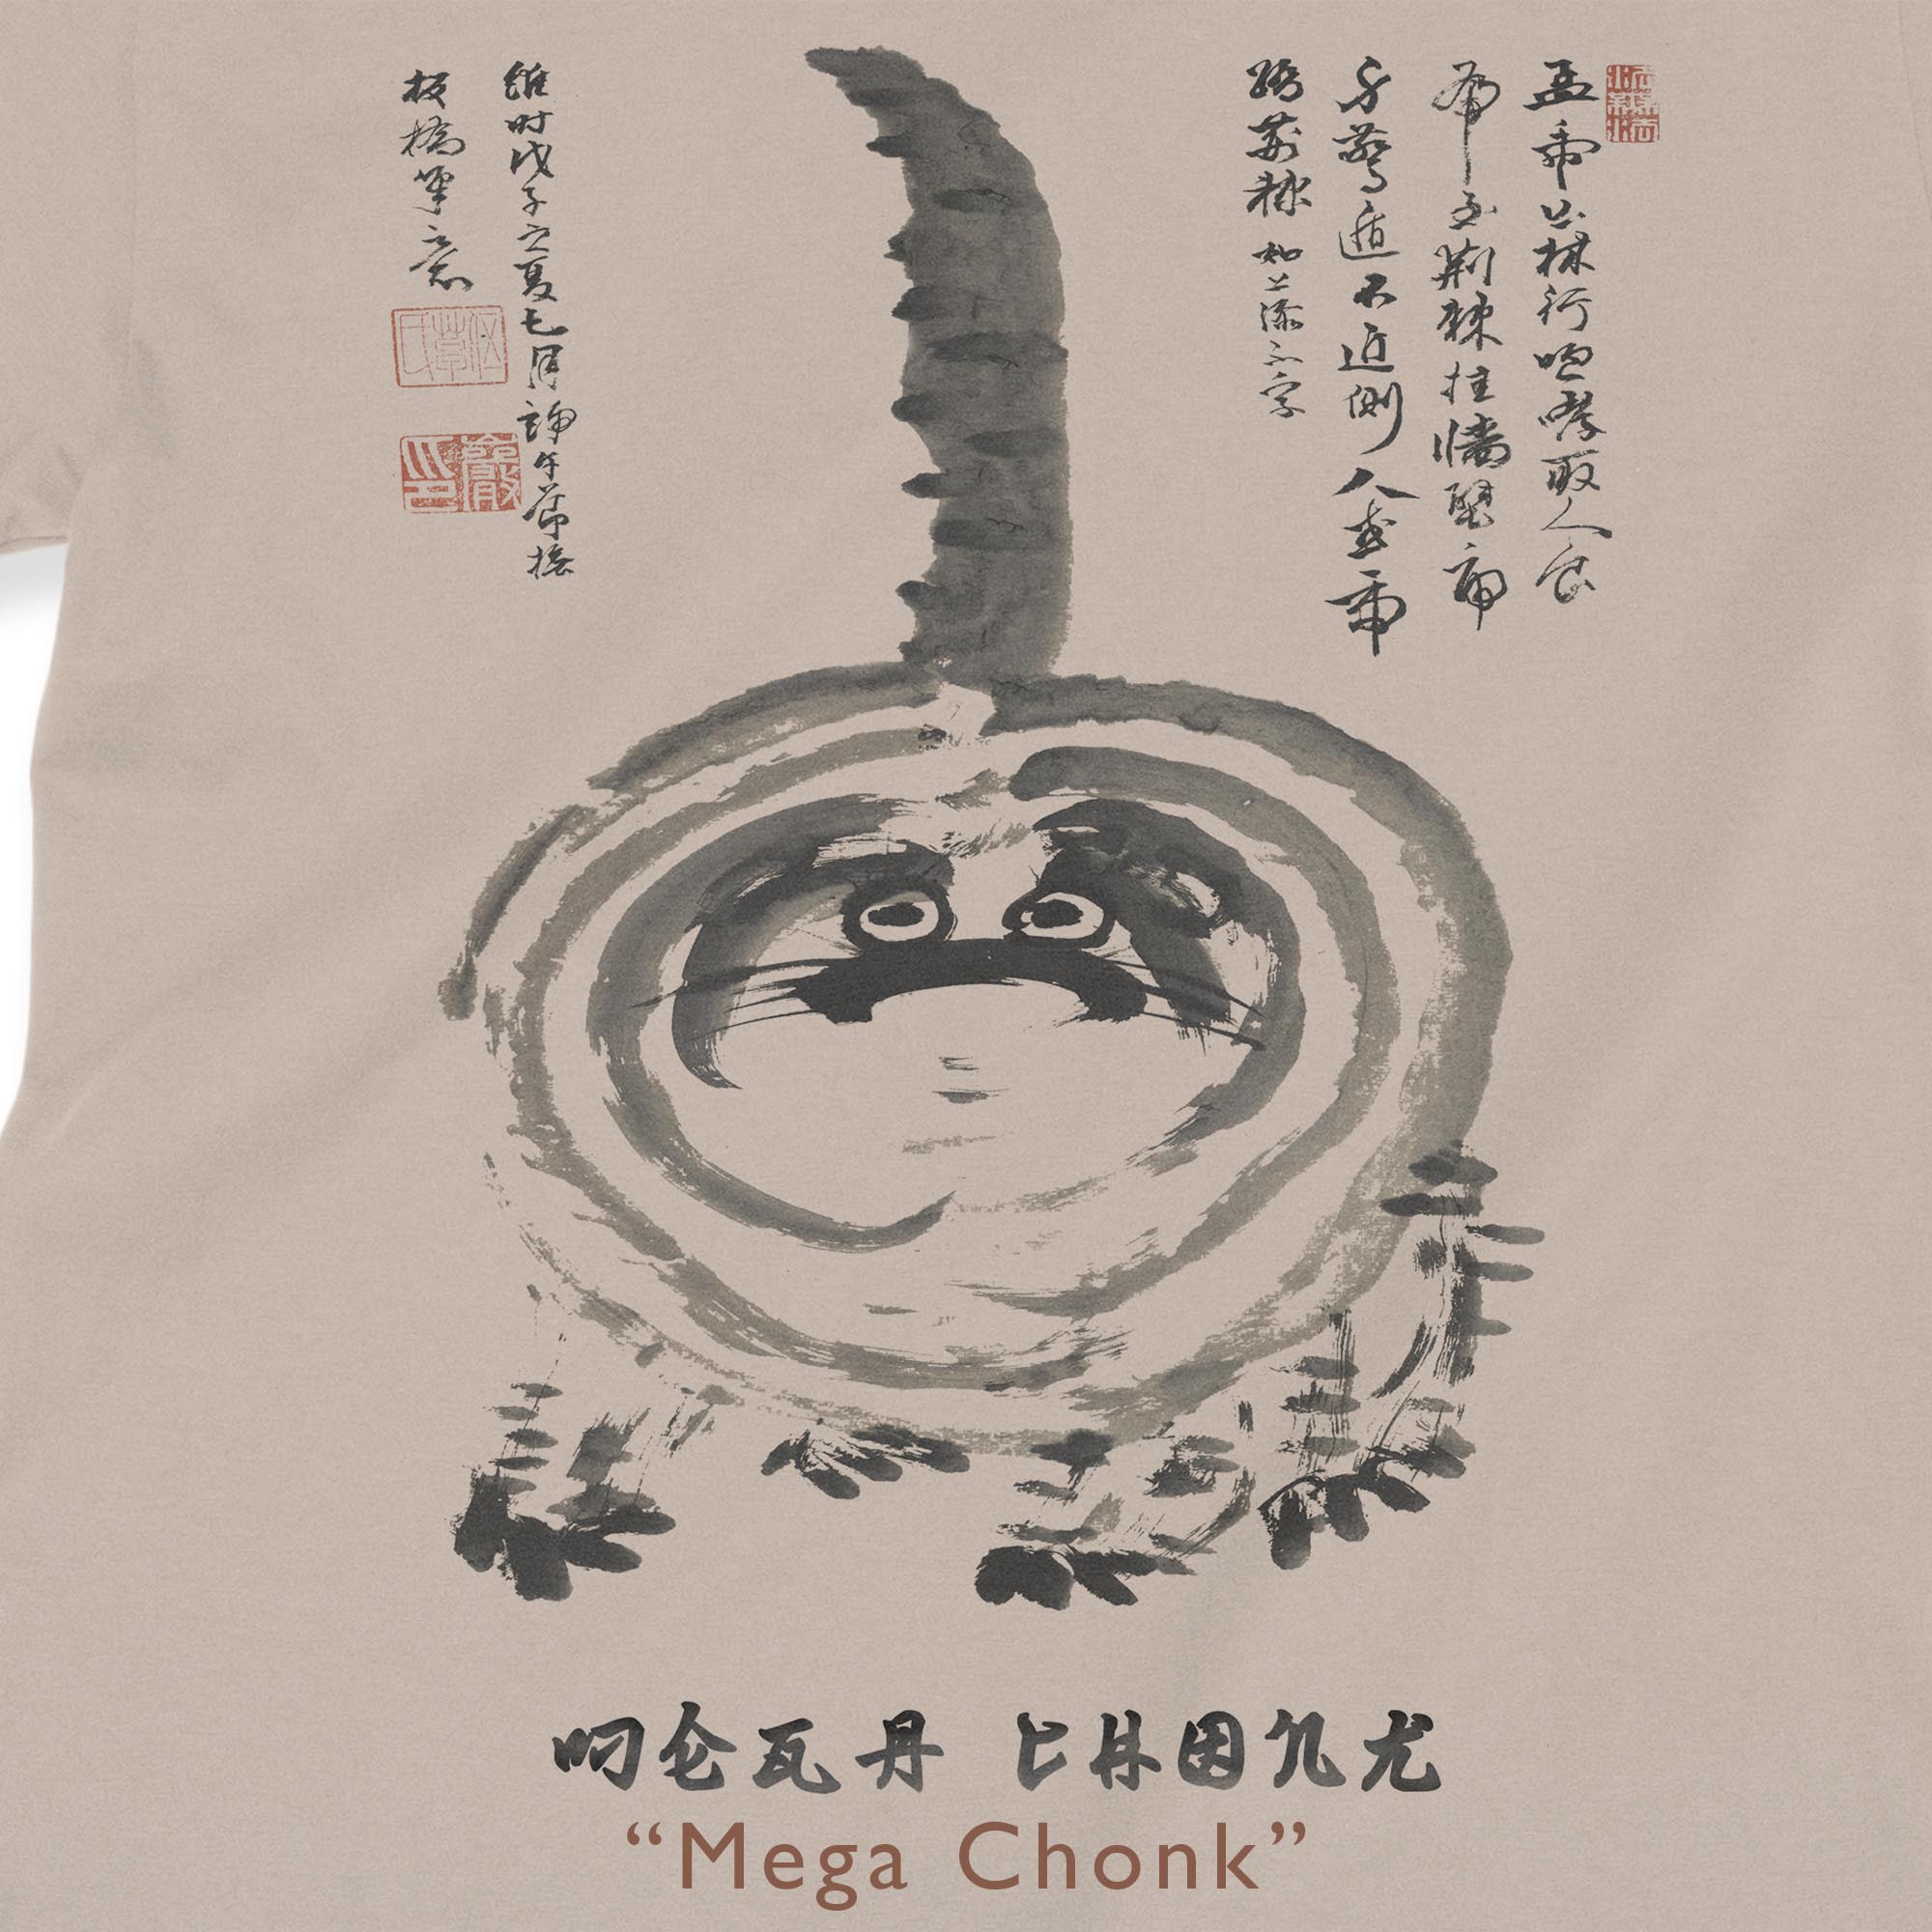 T-Shirts Zen "Mega Chonk" Fat Housecat, Antique Japanese Kawaii Cute Brush Painting Kitty Cat Gift Pet Lover Chinese Graphic Cotton T-Shirt